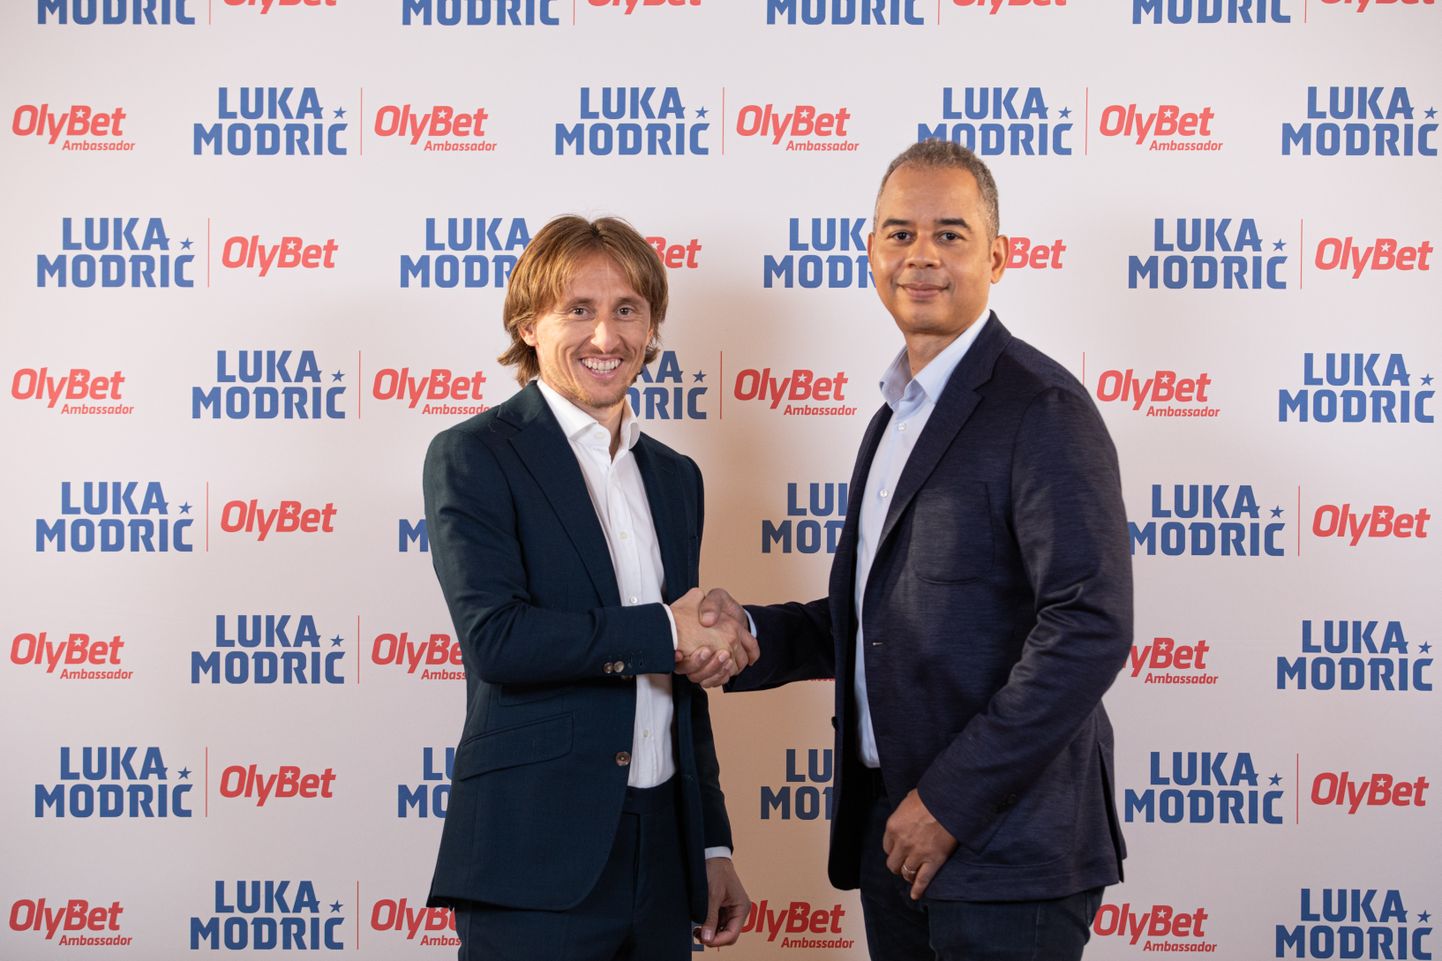 Luka Modrić ja Olympic Entertainment Group ja OlyBet Group juht, Corey Plummer